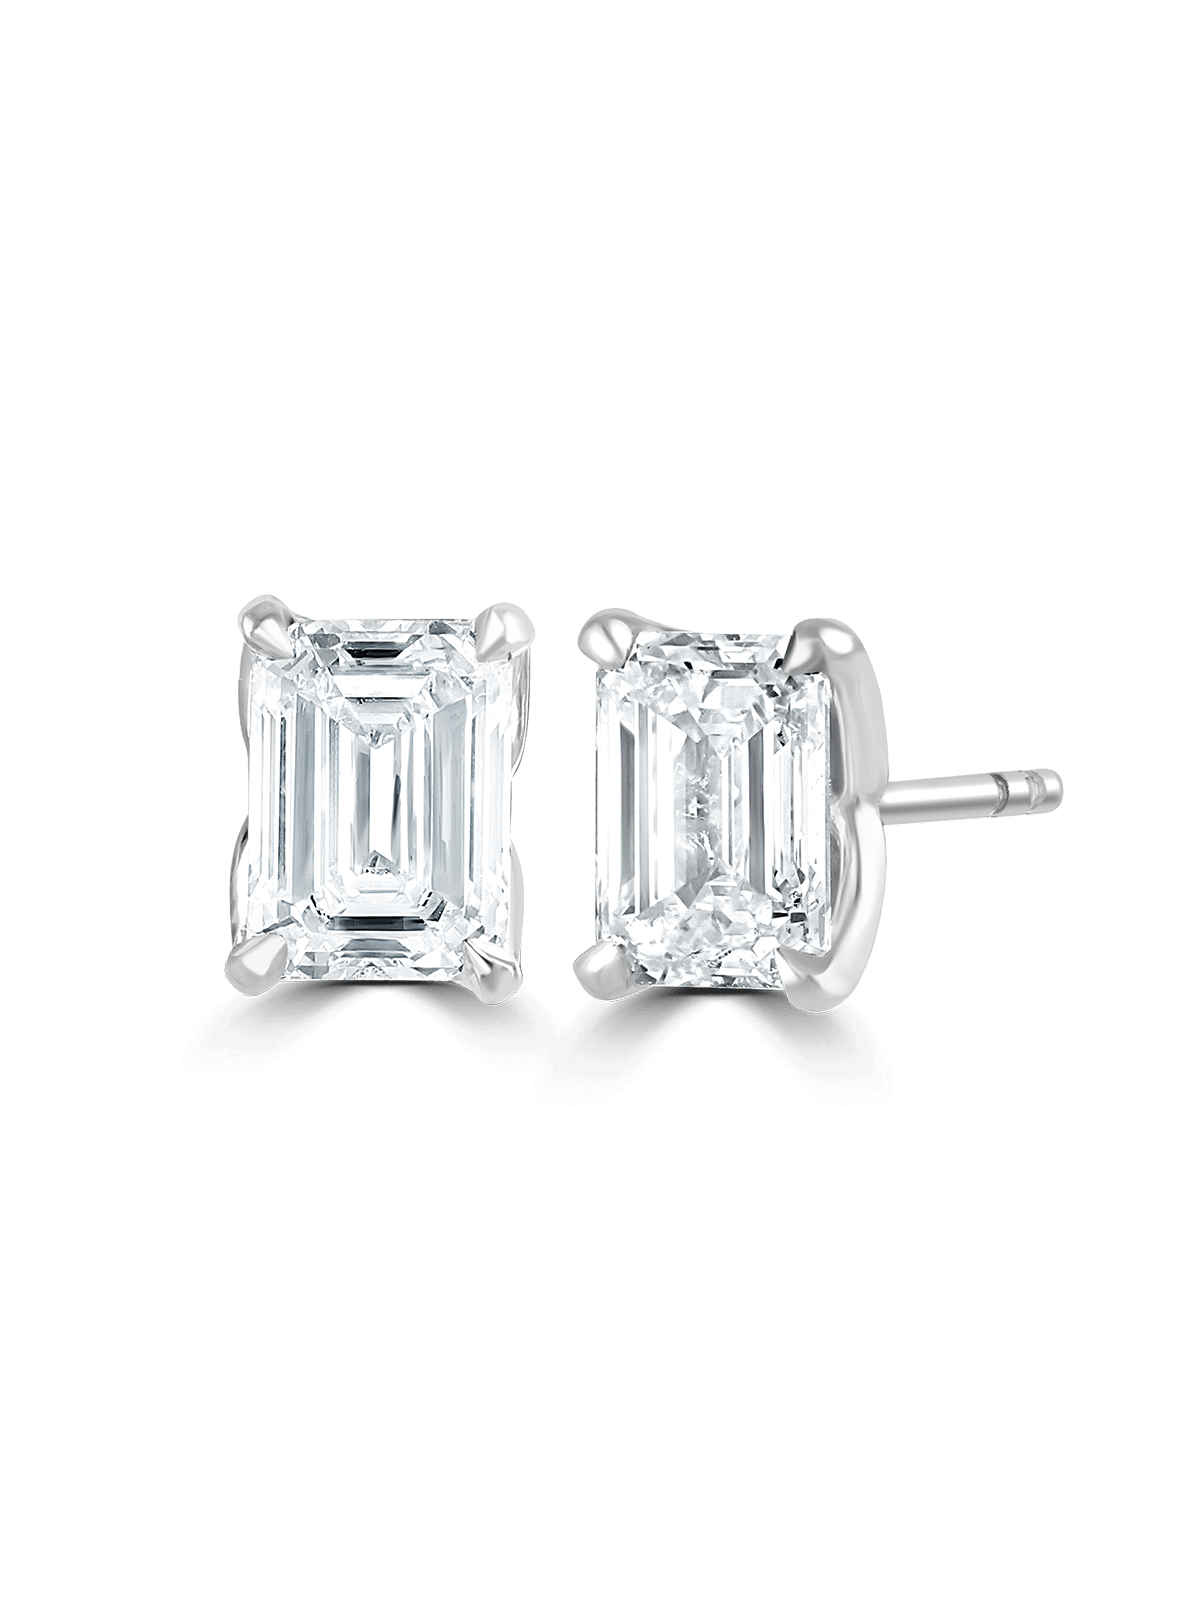 "Sorrel" Approx 2.00ct Emerald Cut Lab Grown Diamond Solitaire Stud Earrings in Platinum